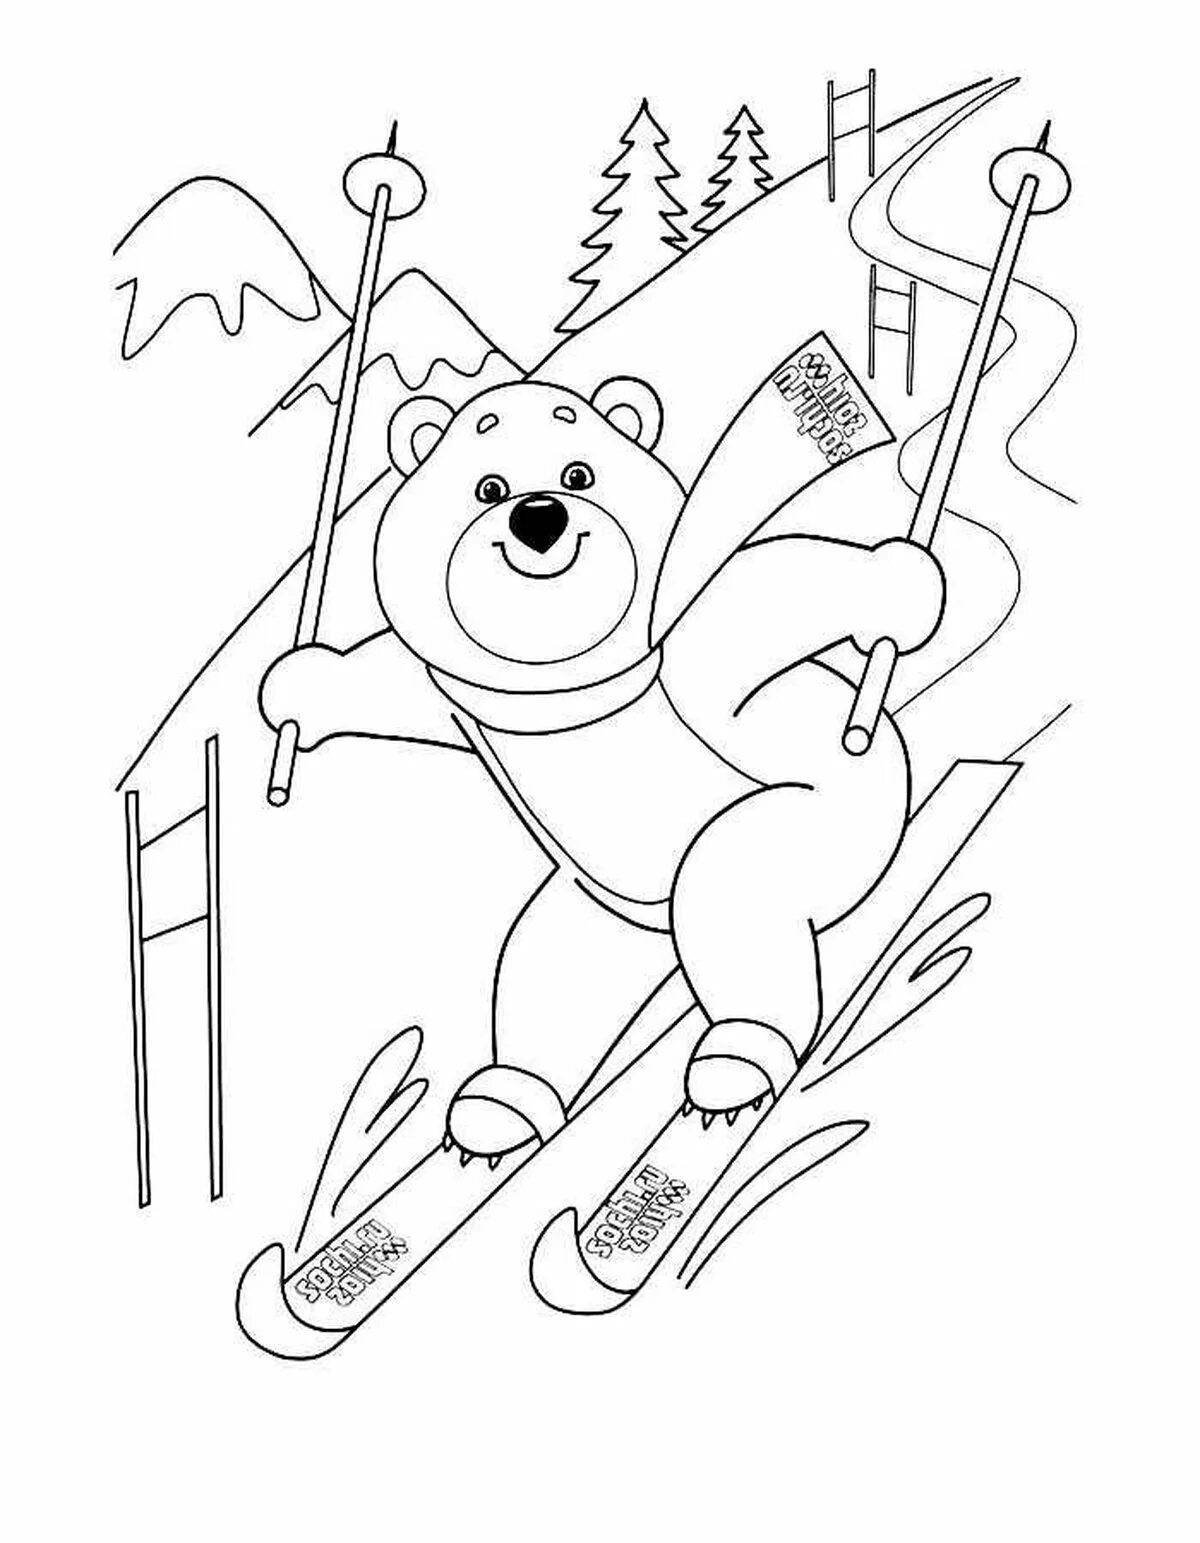 Children's Winter Olympics #3